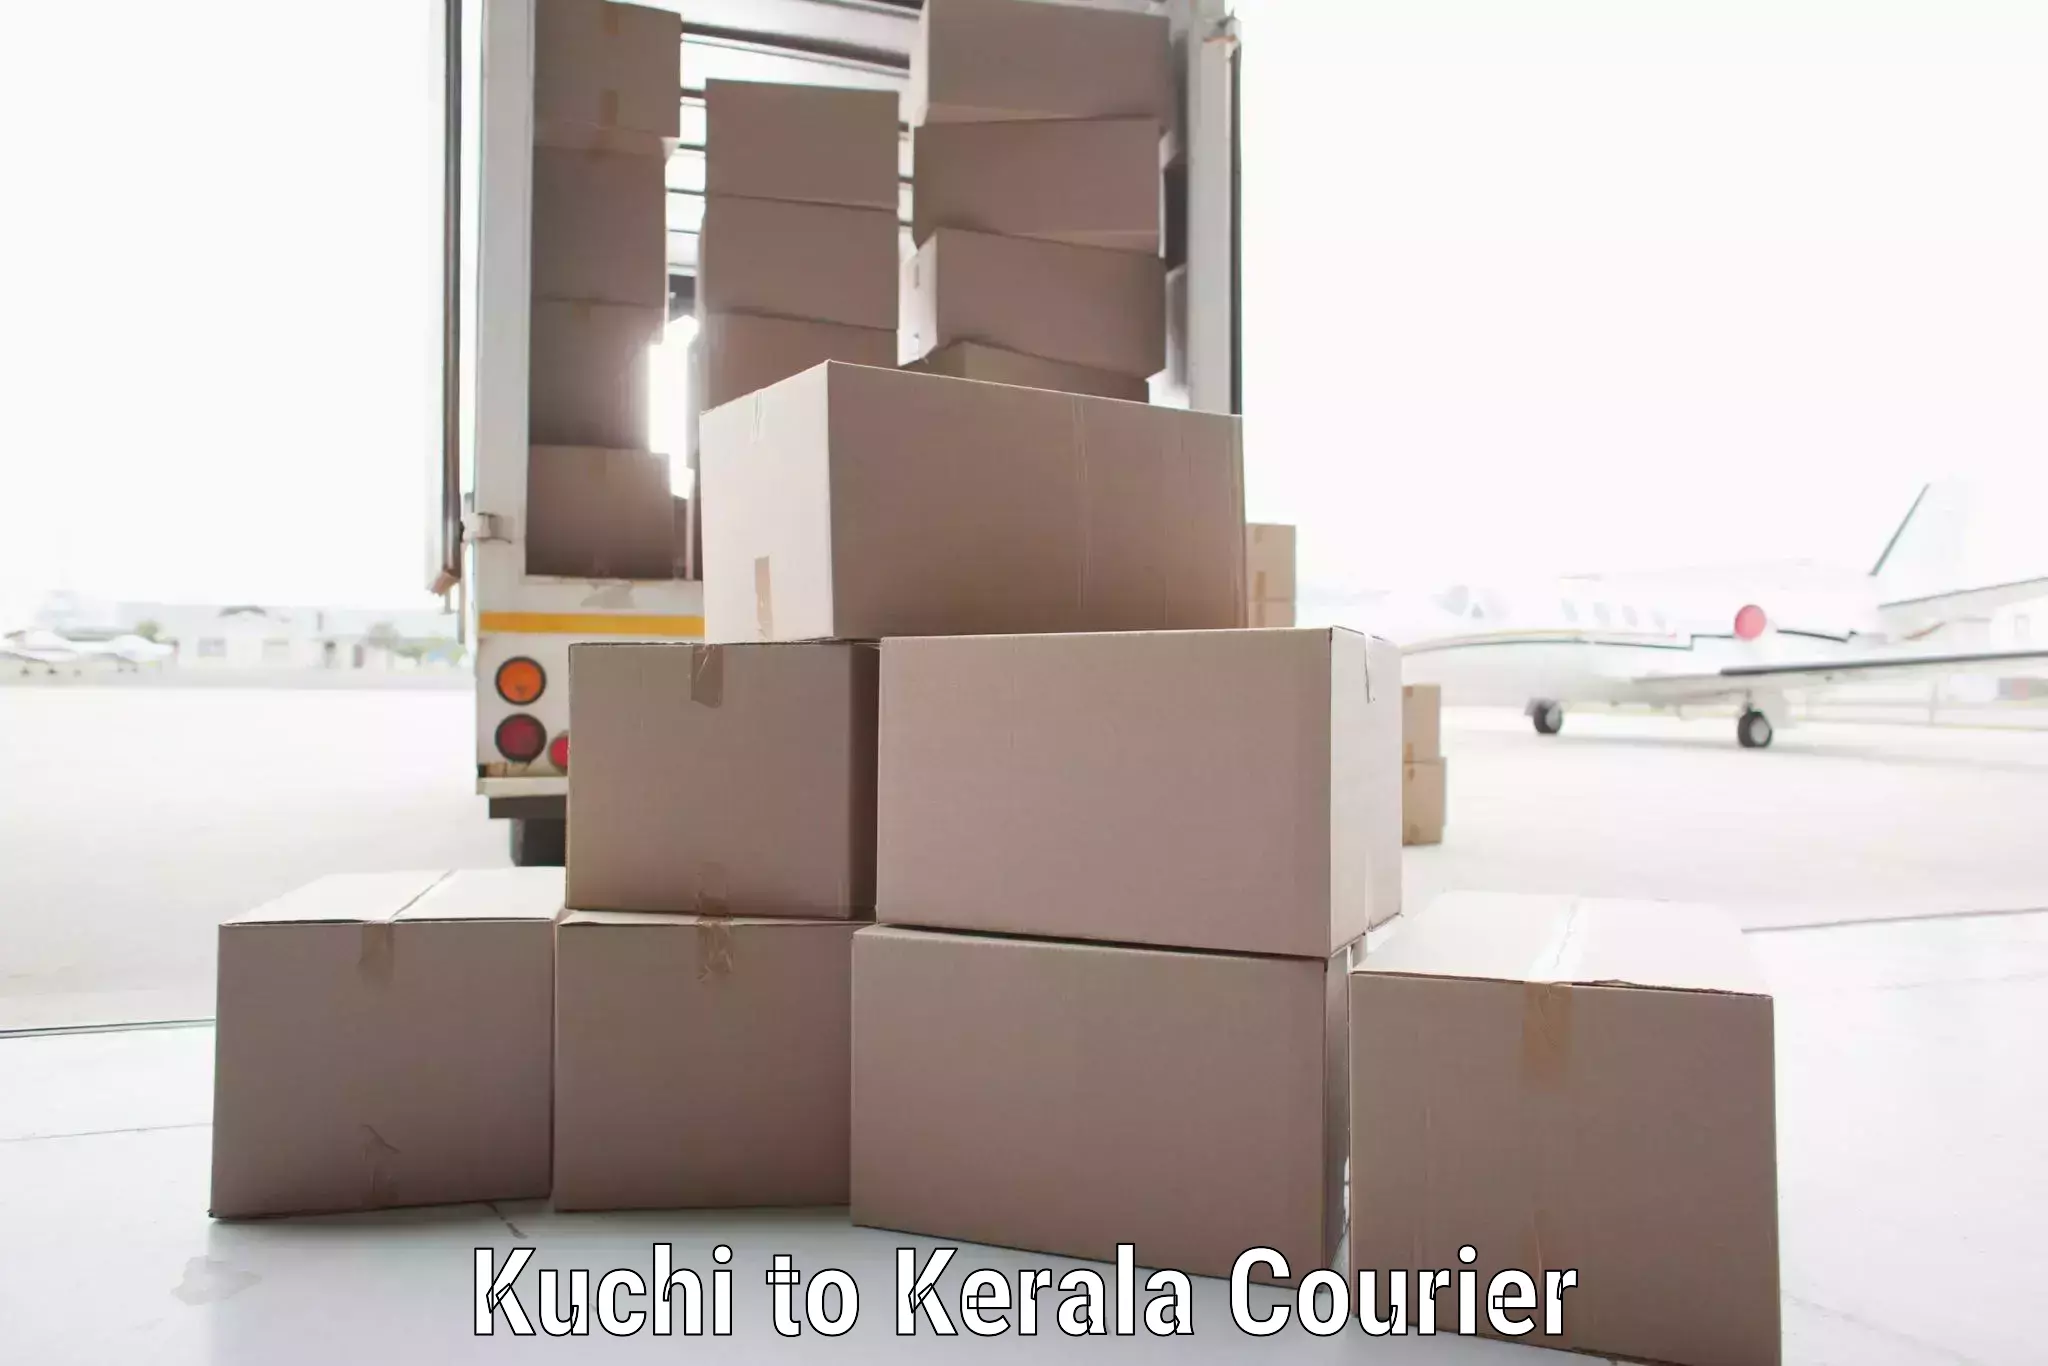 Scheduled delivery Kuchi to Kuchi